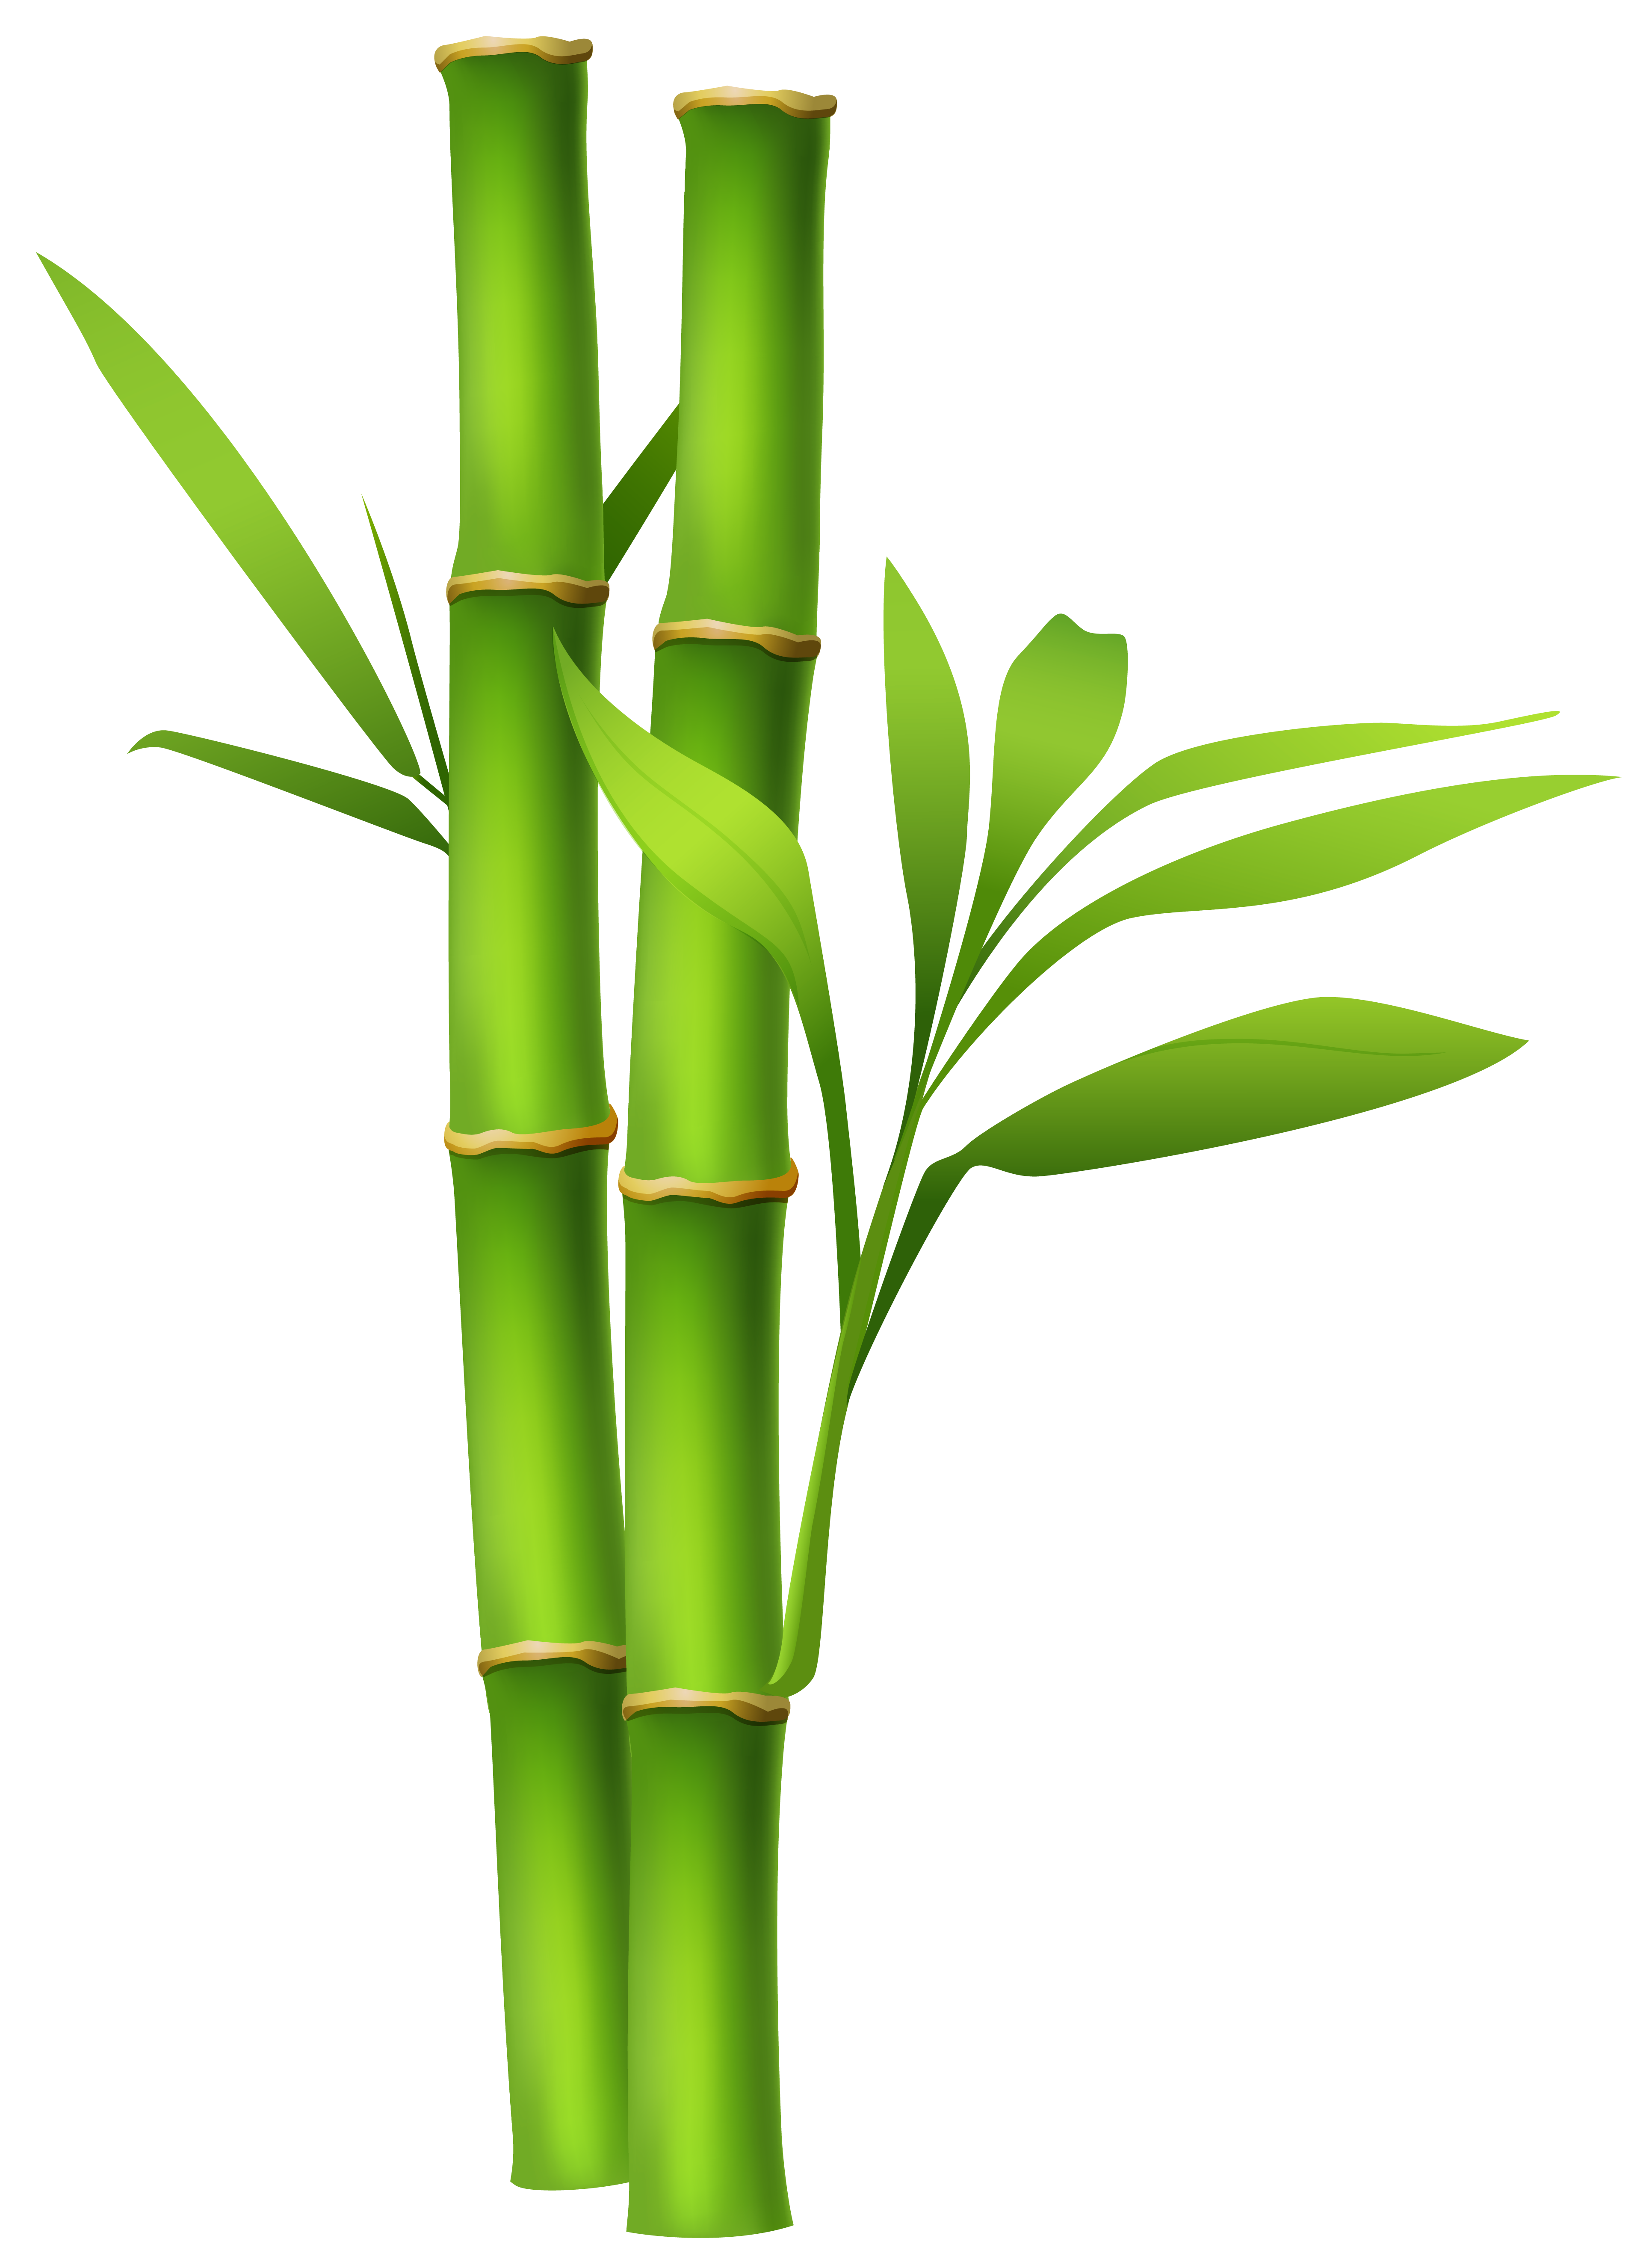 ... Bamboo Clipart - cliparta - Bamboo Clipart